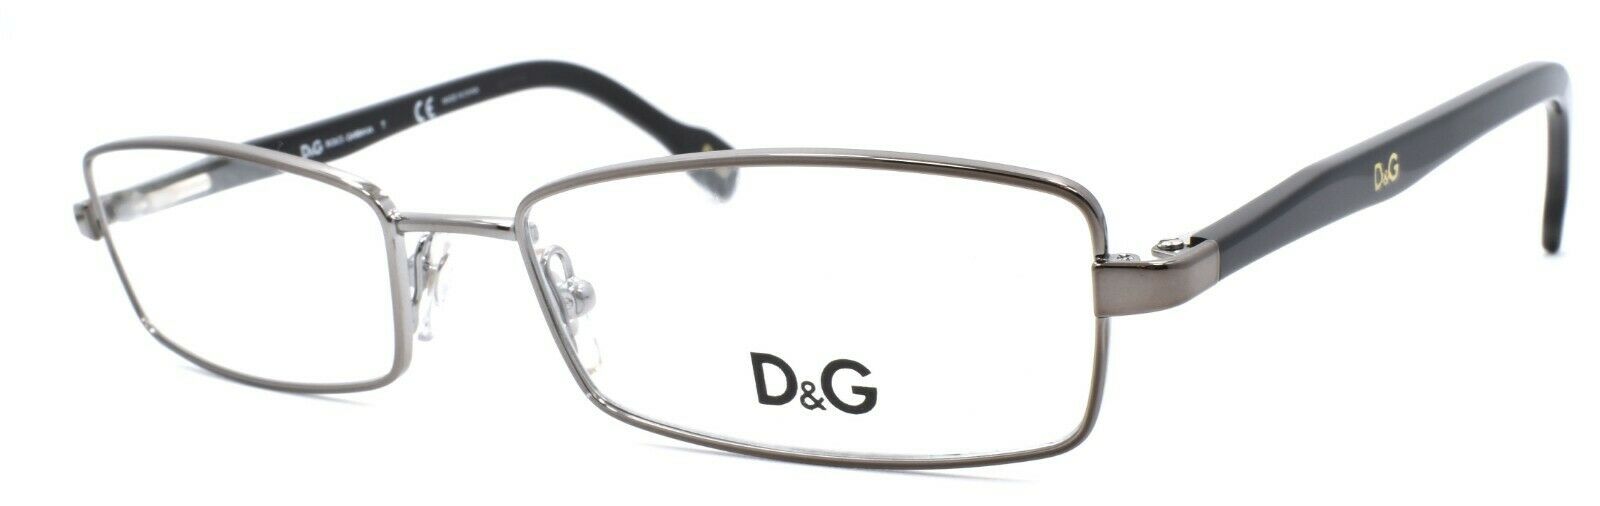 1-Dolce & Gabbana D&G 5079 079 Women's Eyeglasses 51-16-135 Gunmetal-679420370897-IKSpecs